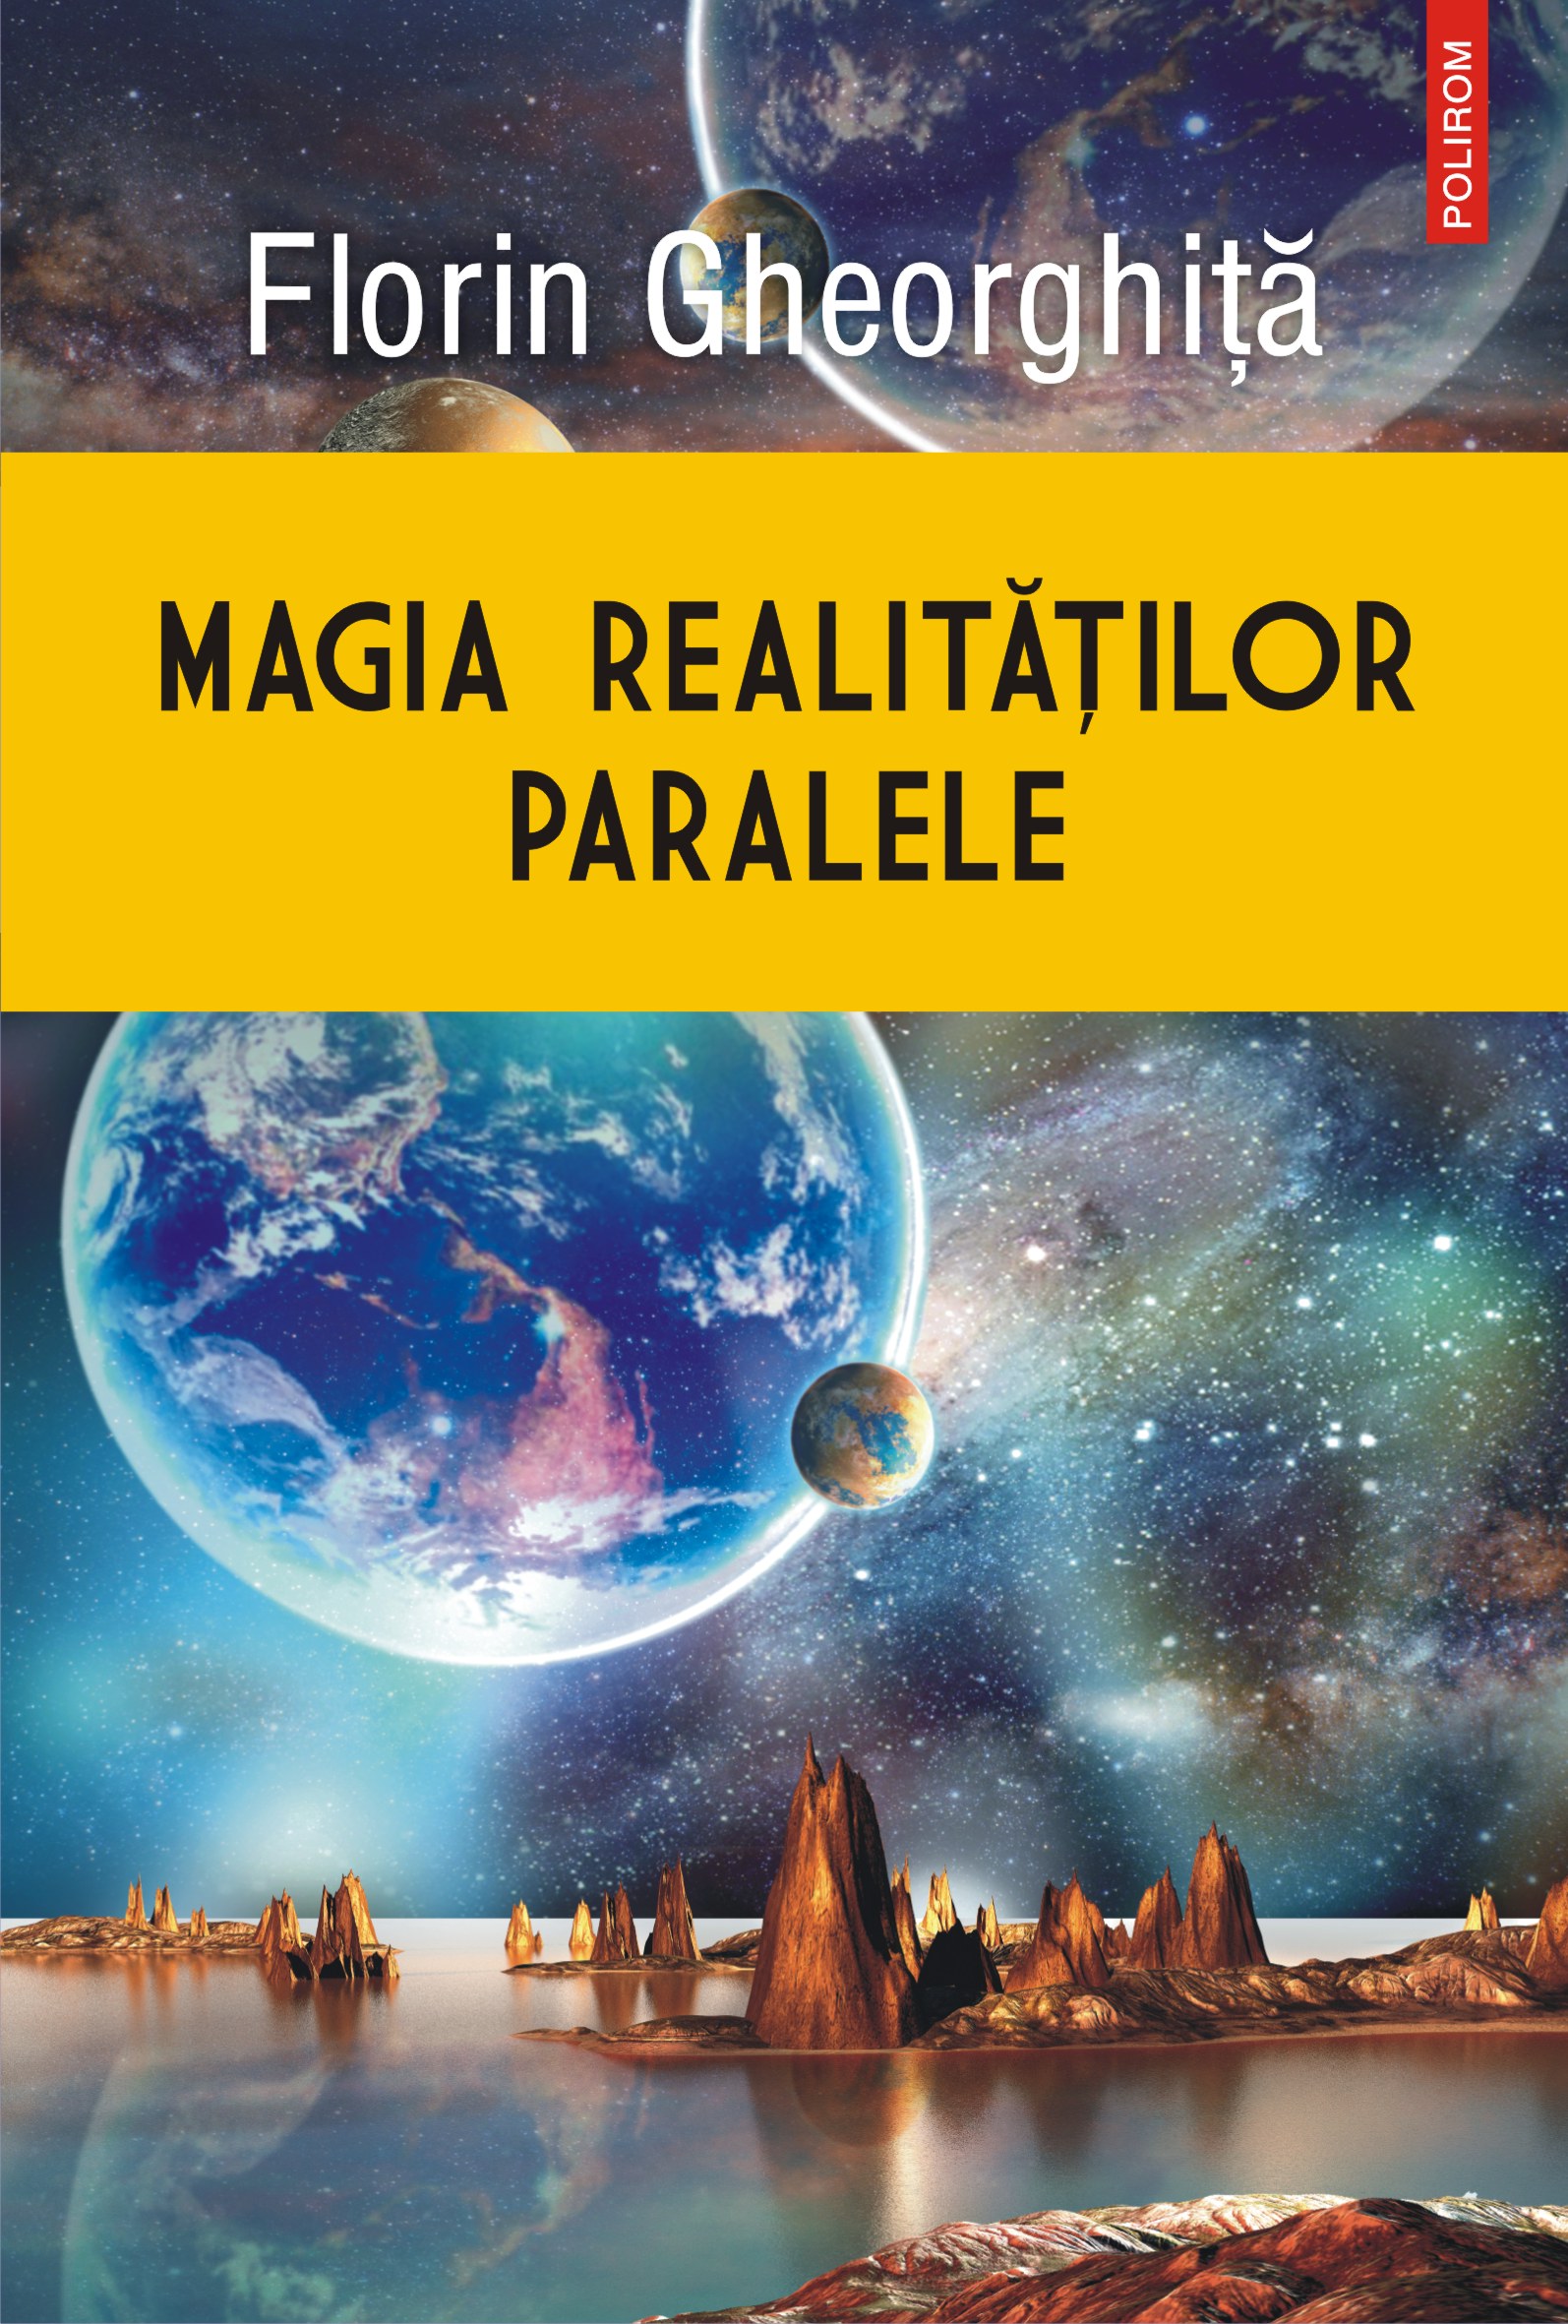 eBook Magia realitatilor paralele - Florin Gheorghita